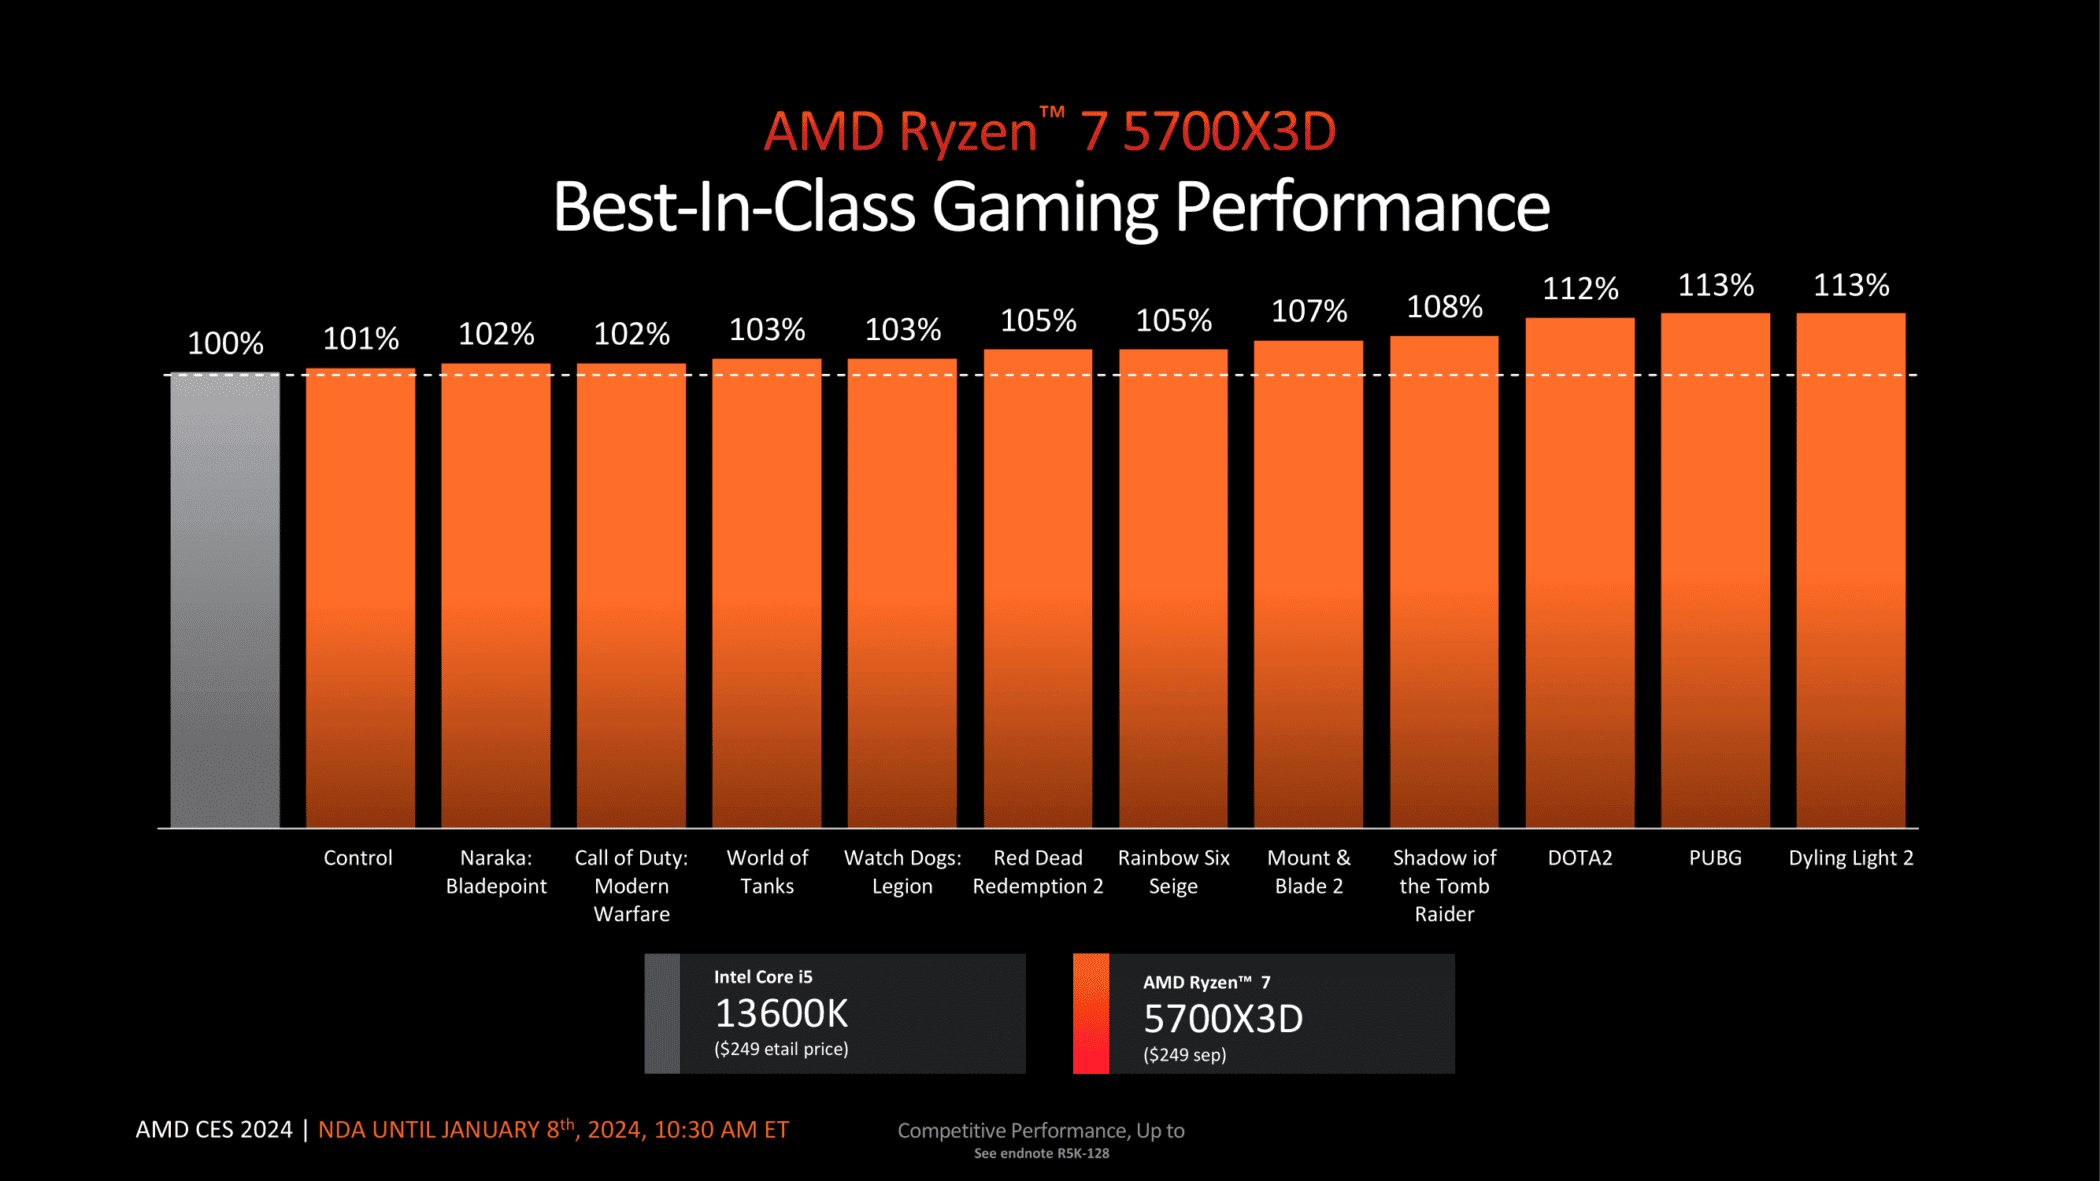 AMD Client Processor Update CES 2024 24